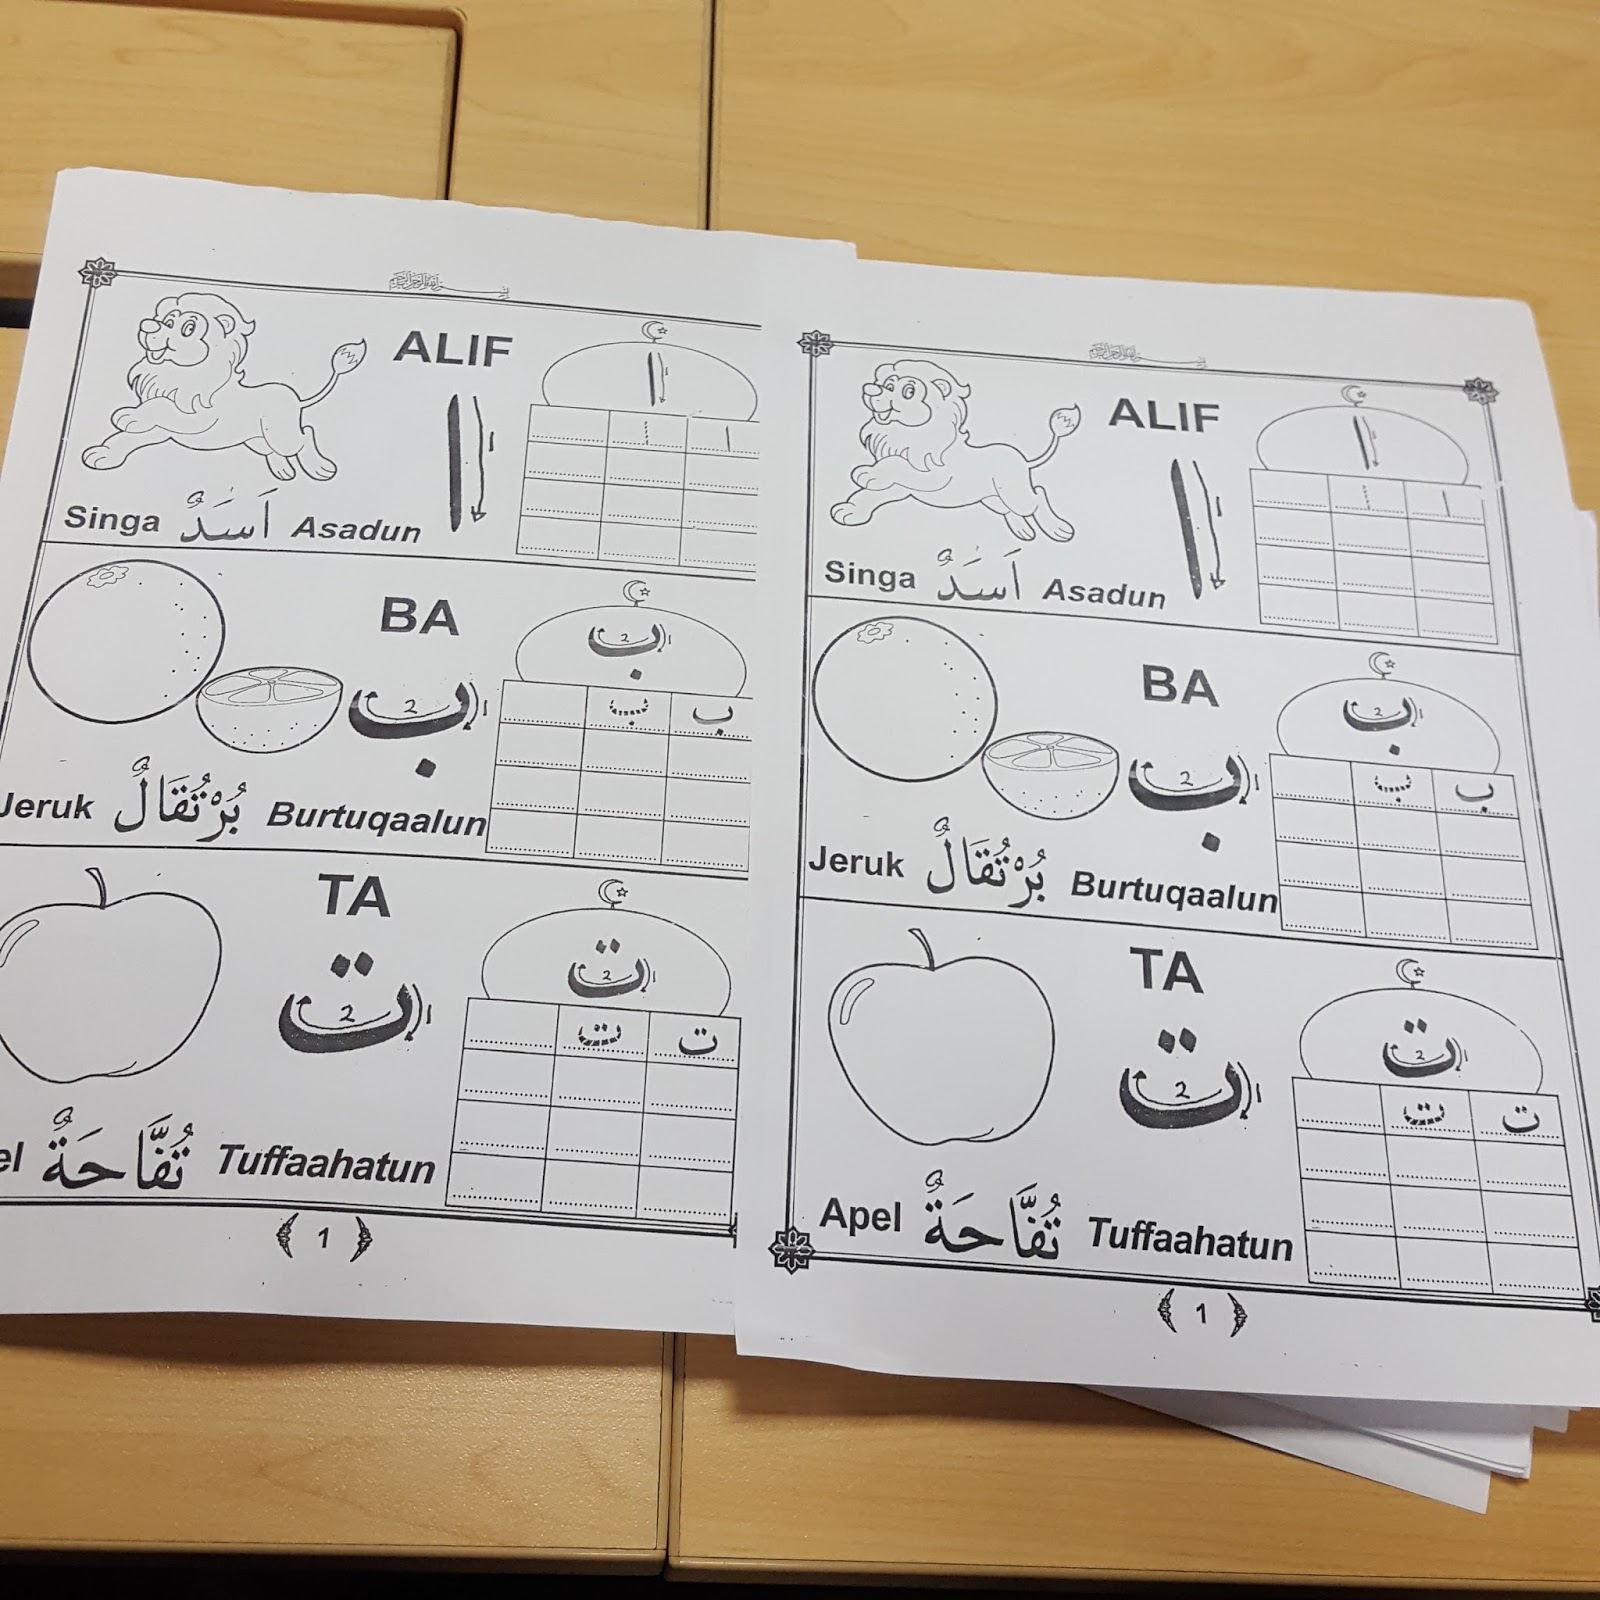 Ini adalah tugas yang kami berikan kepada anak anak Saat mengerjakan tugas mewarnai dan menulis huruf hijaiyah